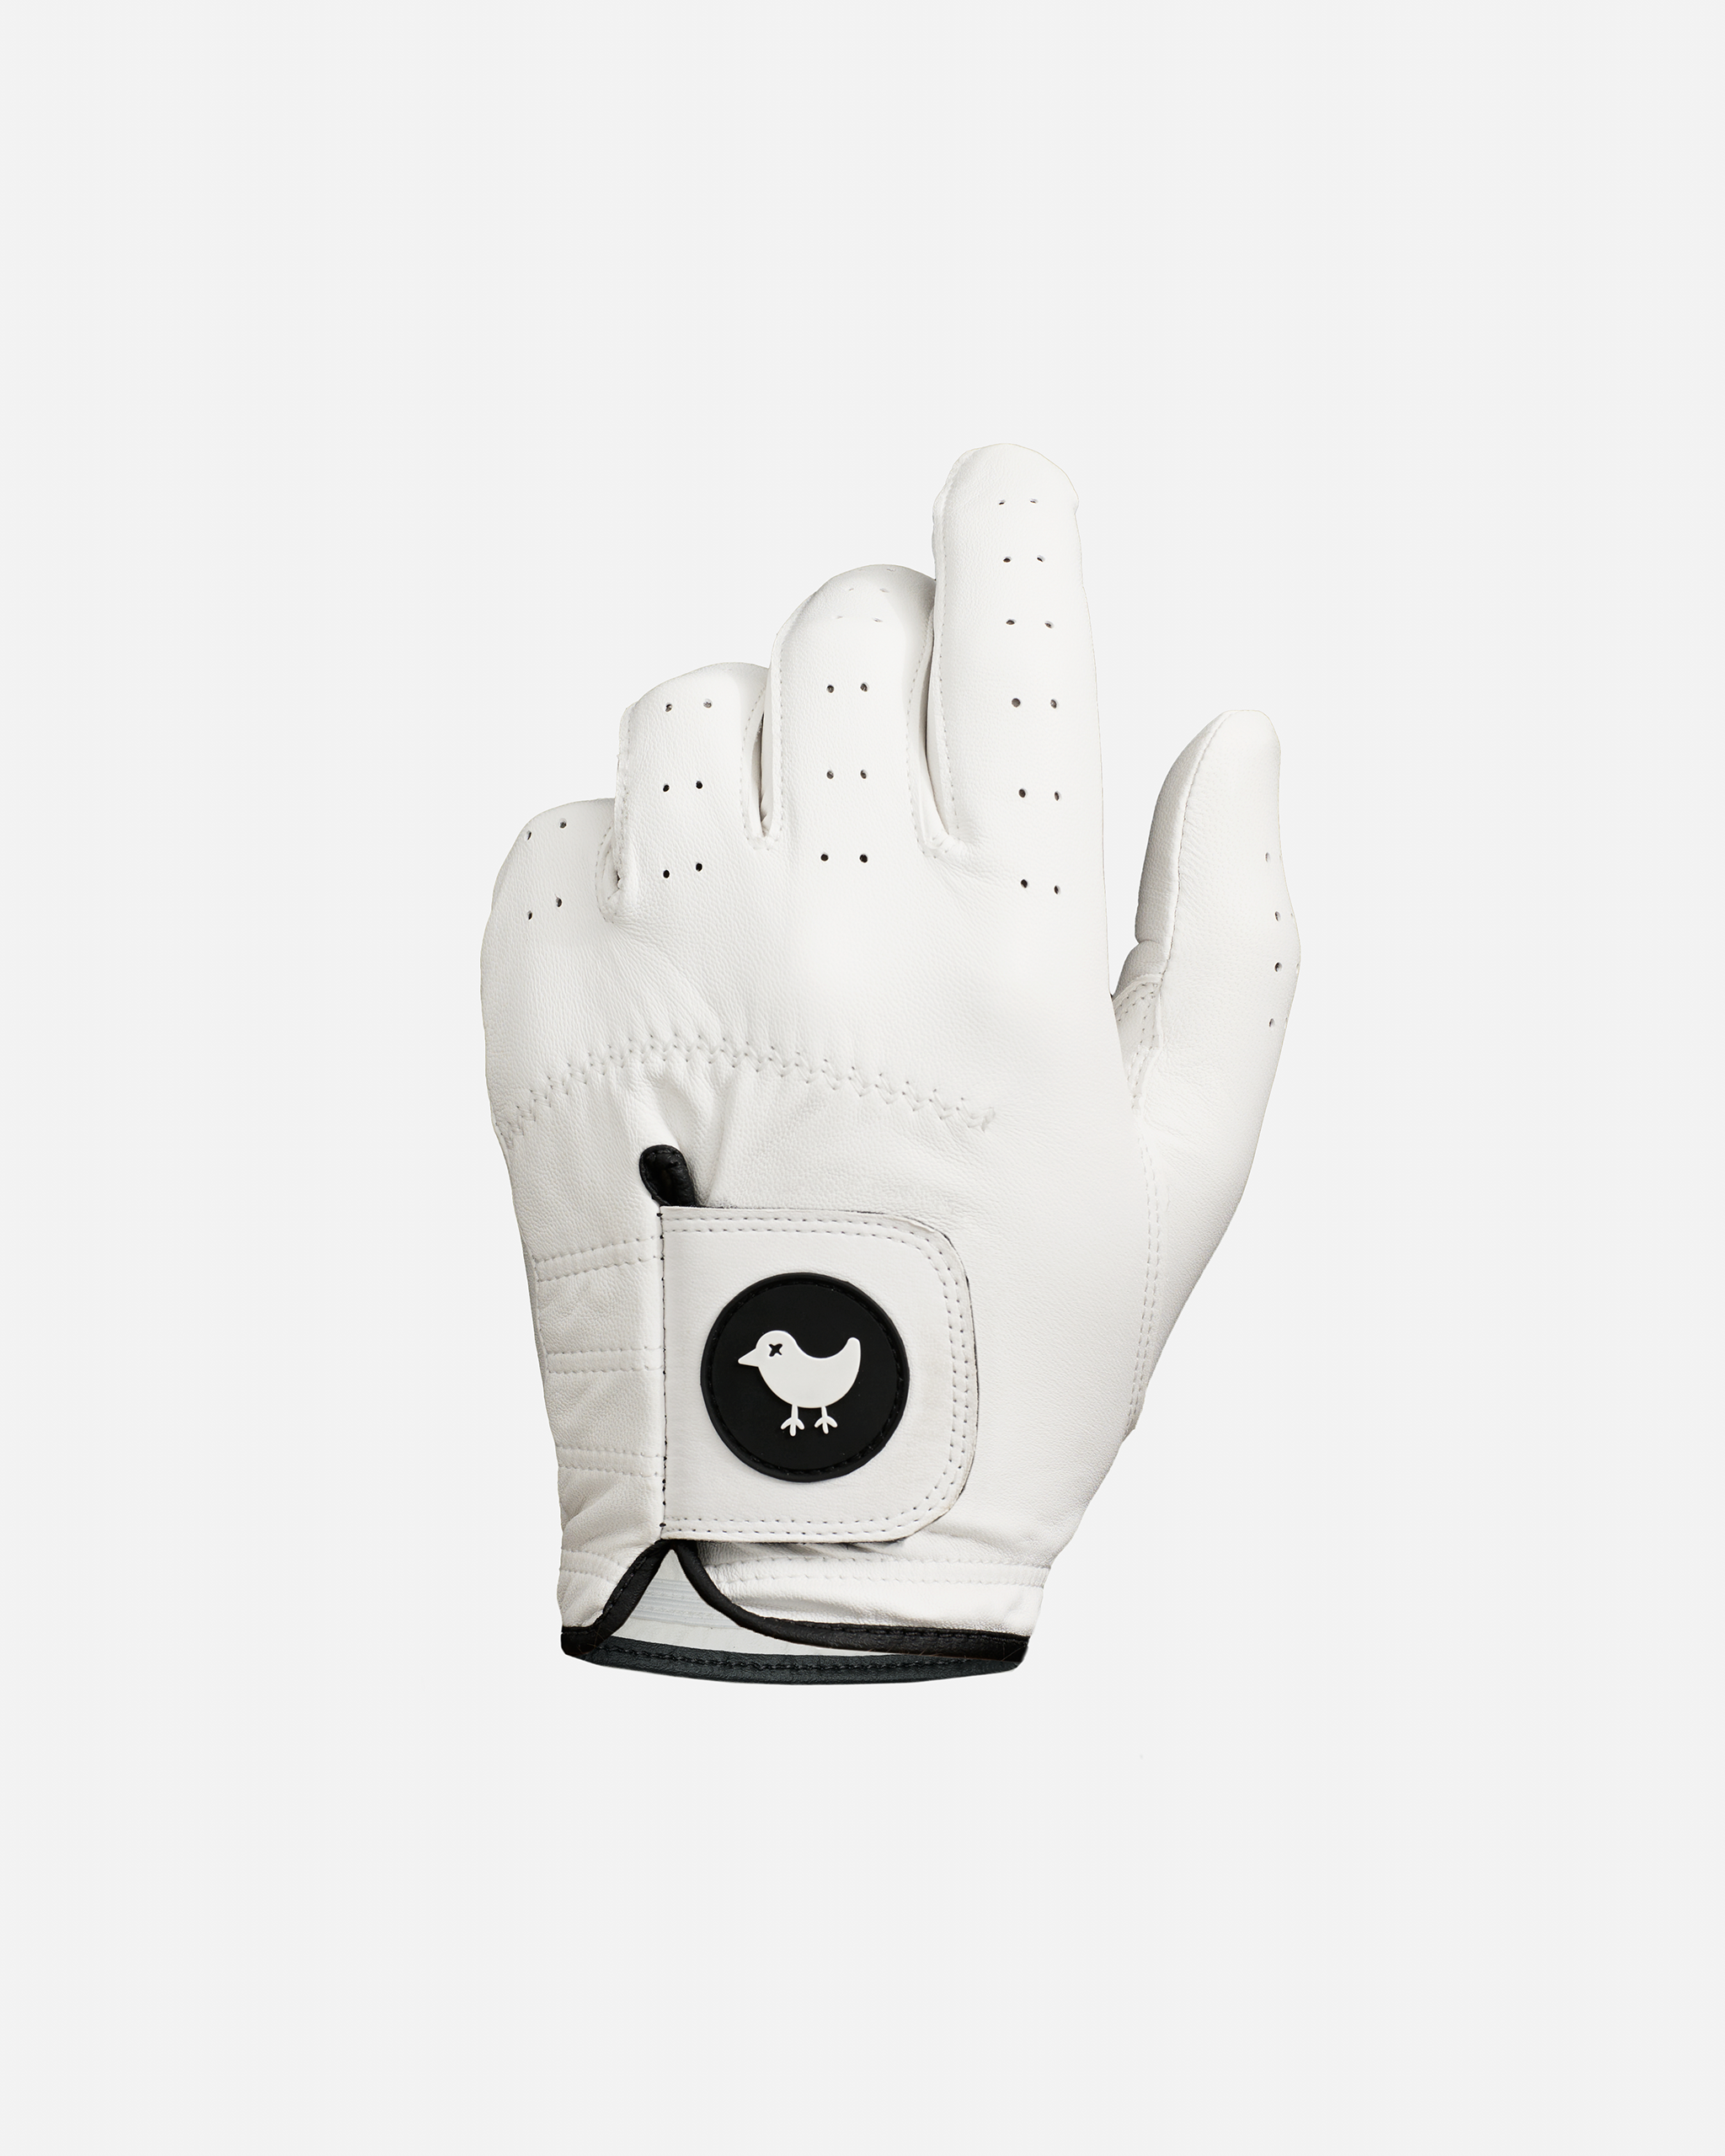 Left Glove - Bad Birdie